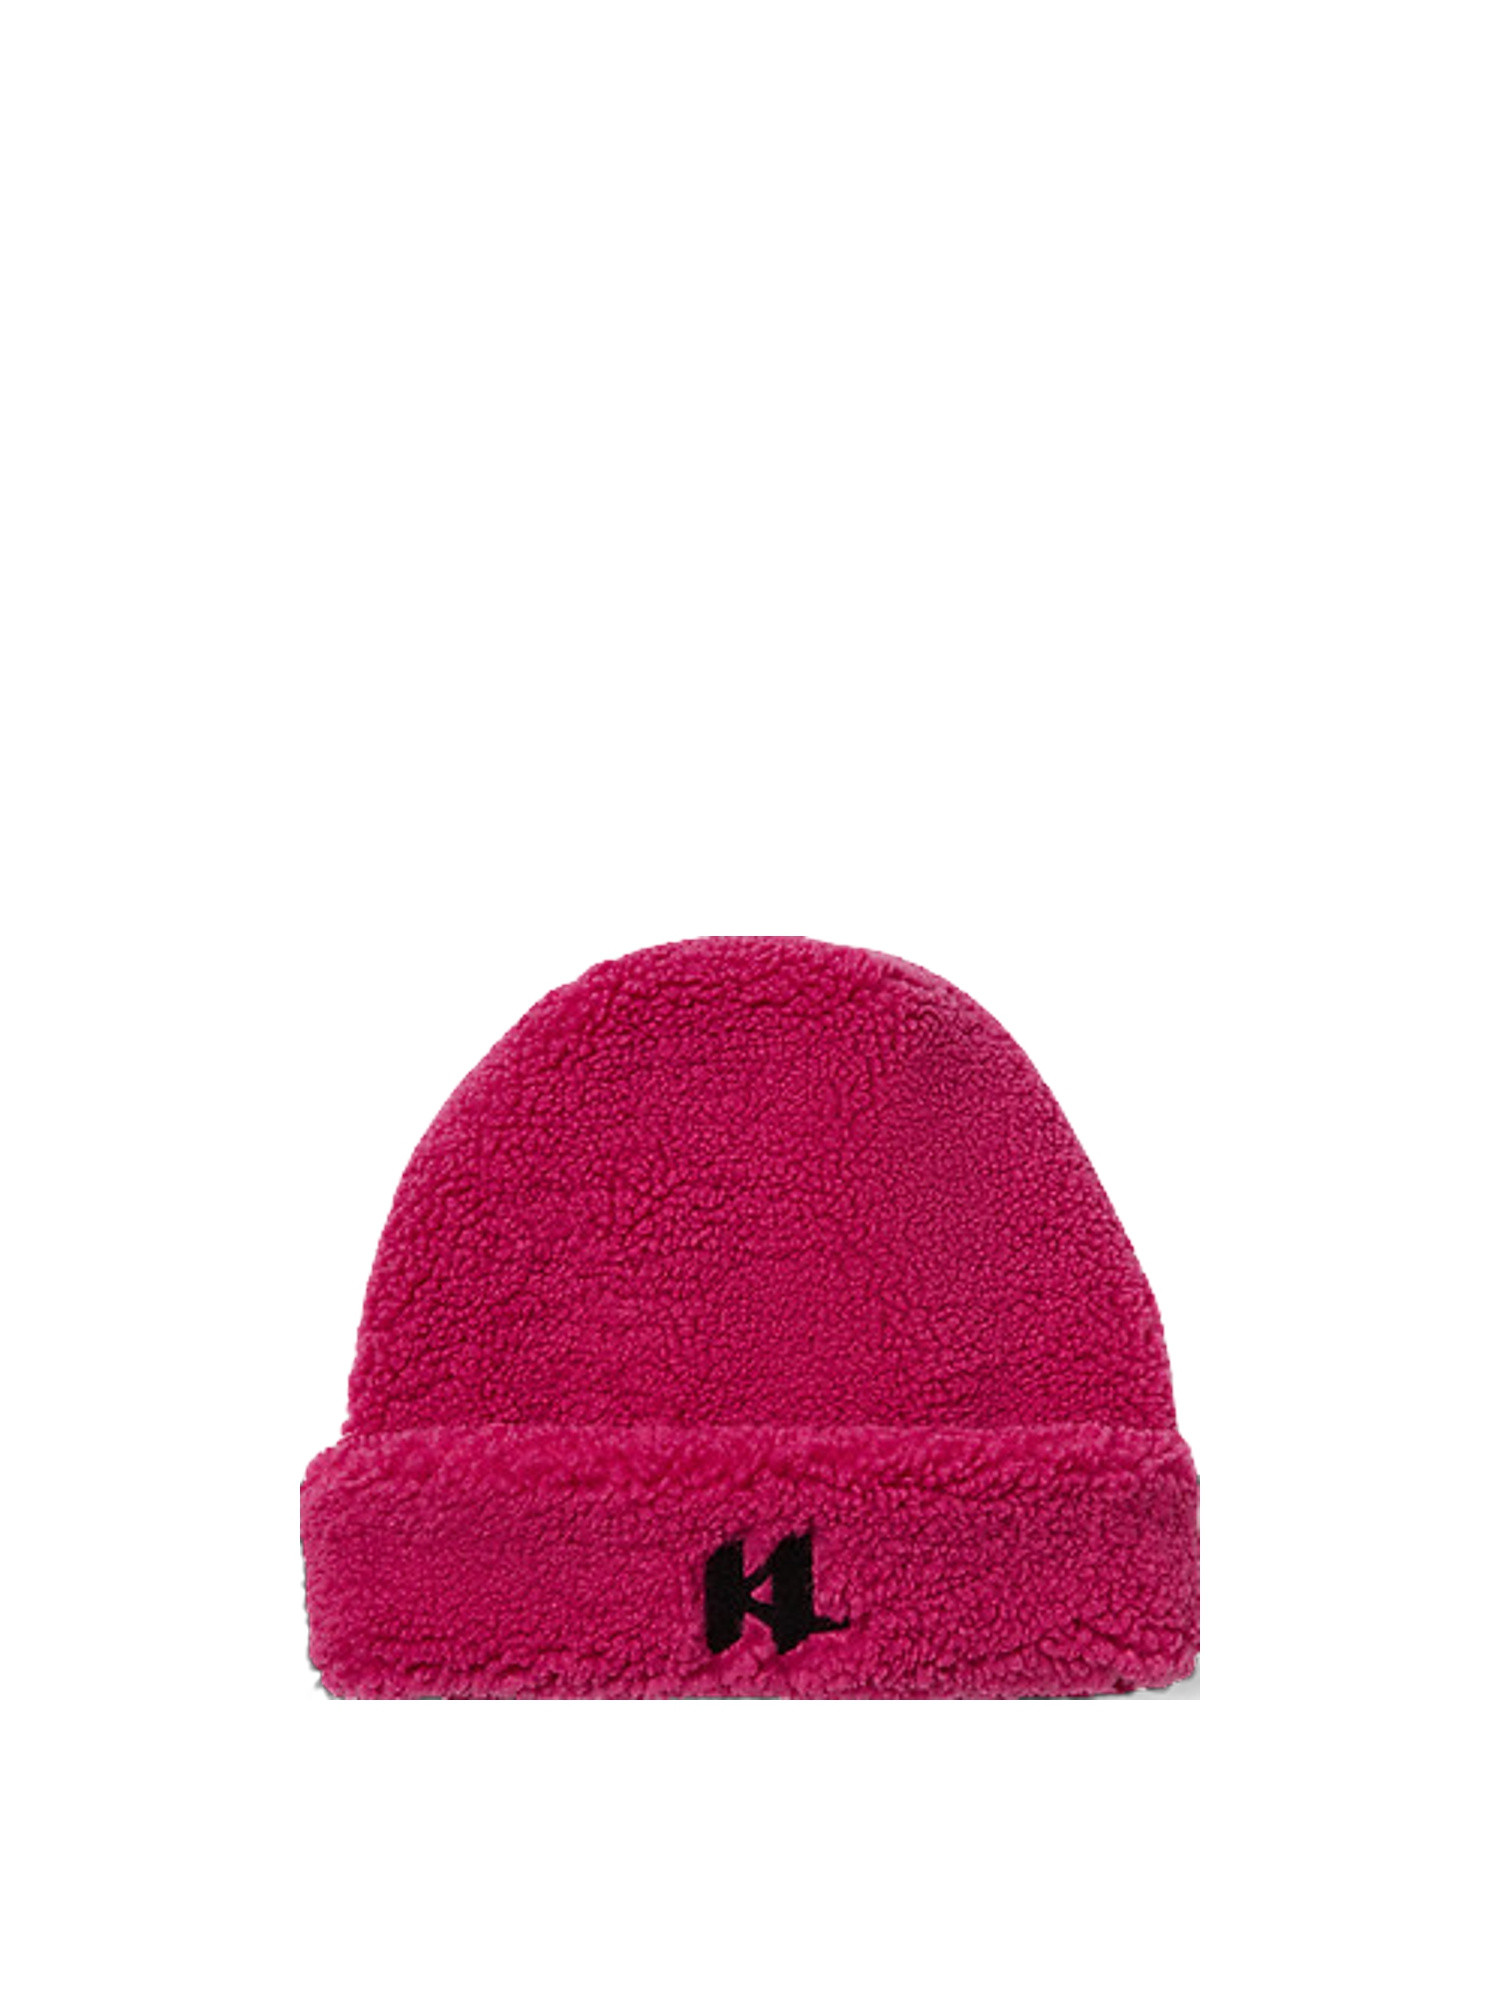 Karl Lagerfeld - Berretto reversibile in ecomontone, Pink, large image number 0